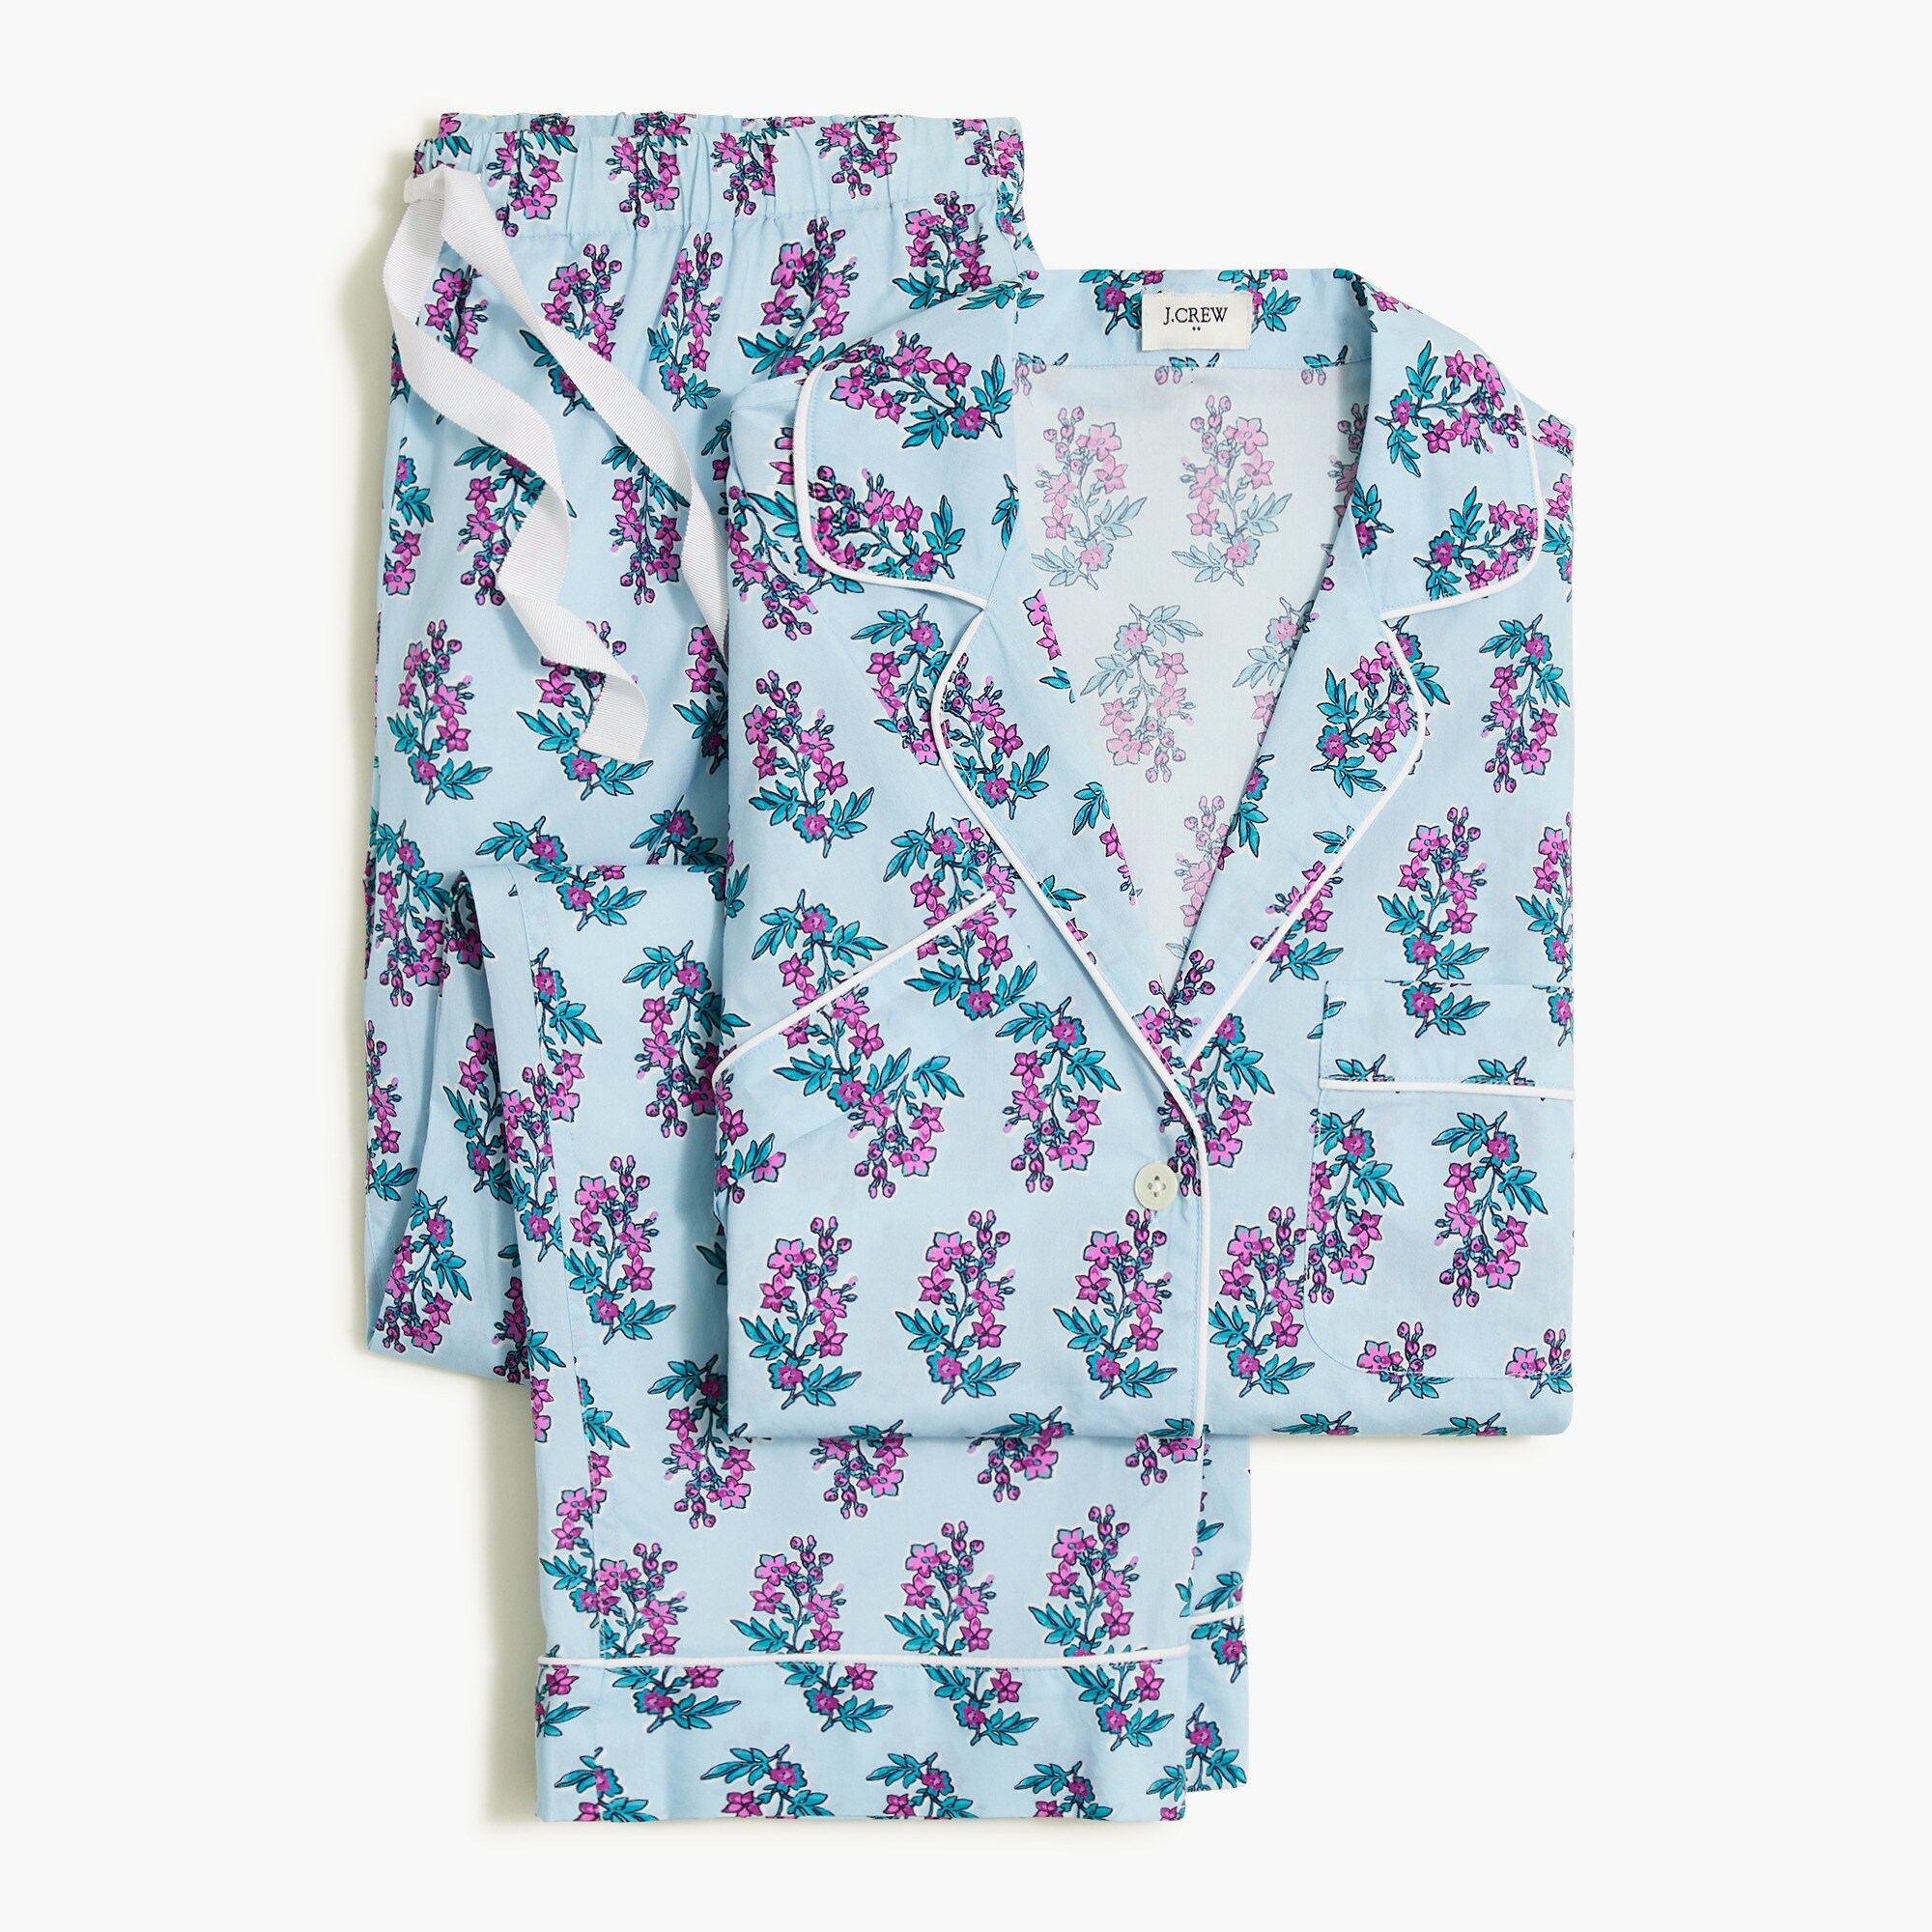 womens Short-sleeve pajama set with cropped pant